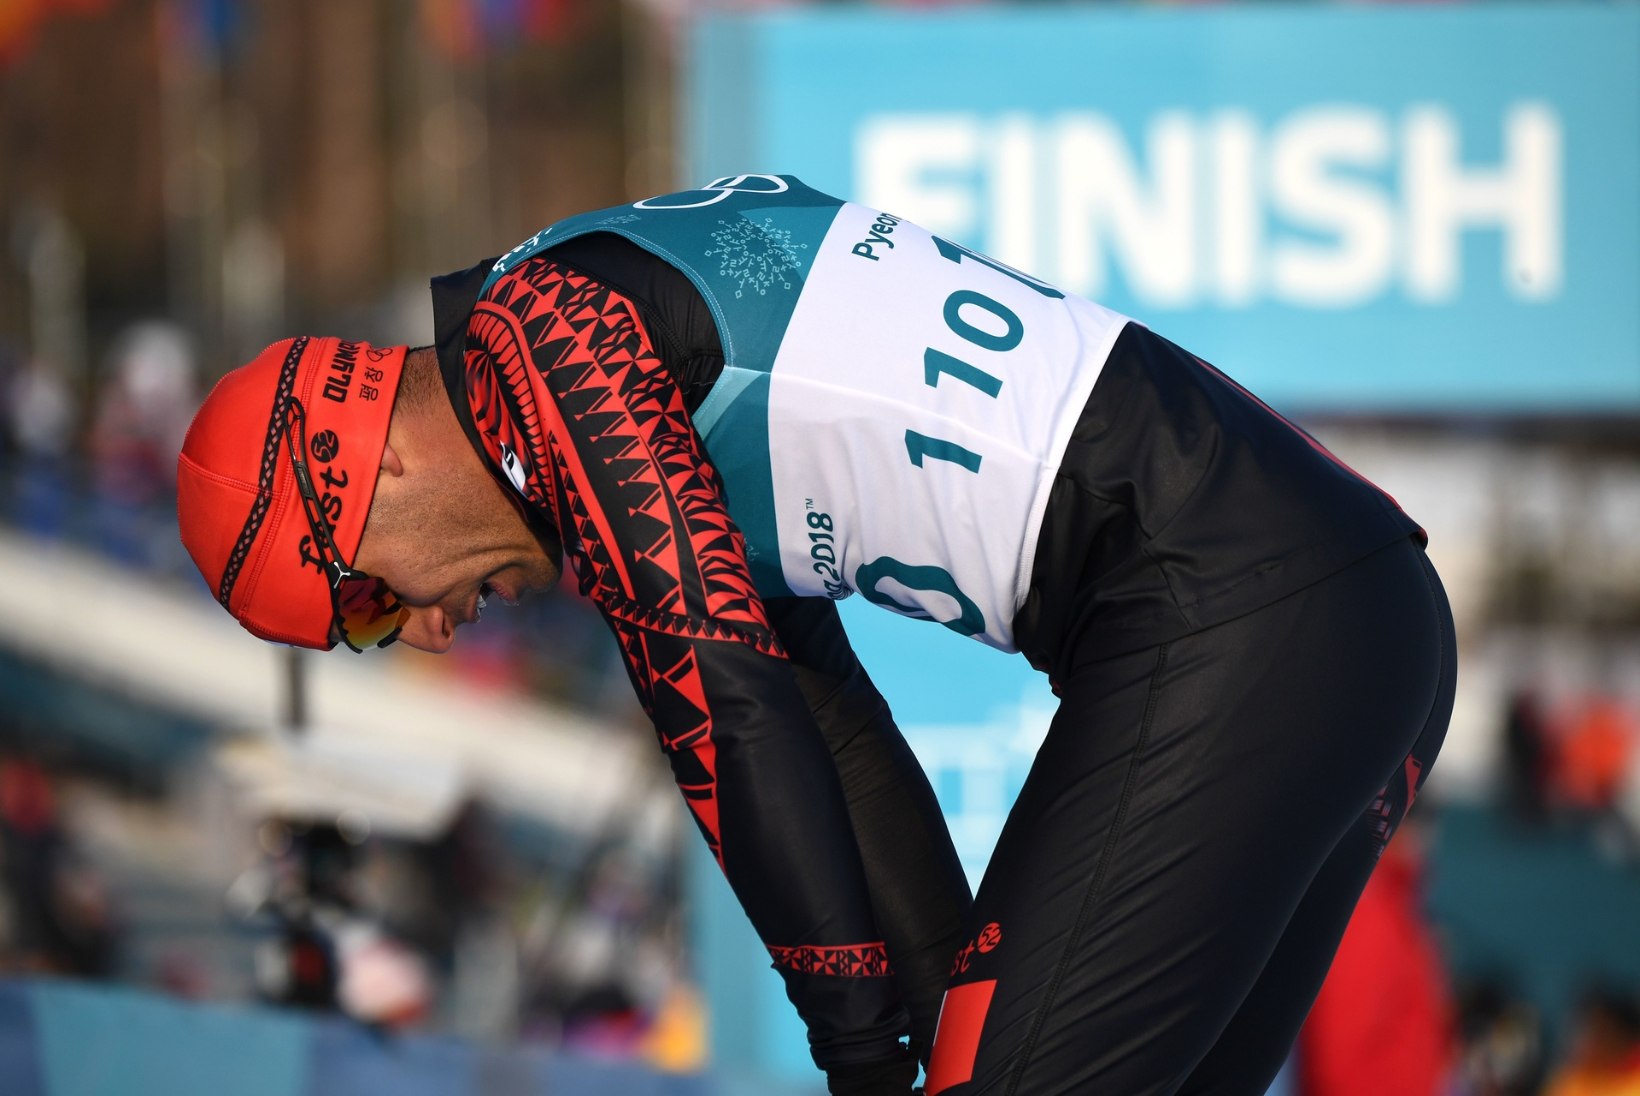 Pyeongchang 2018: Norra medalisadu, doping ja ajalooline geisuudlus